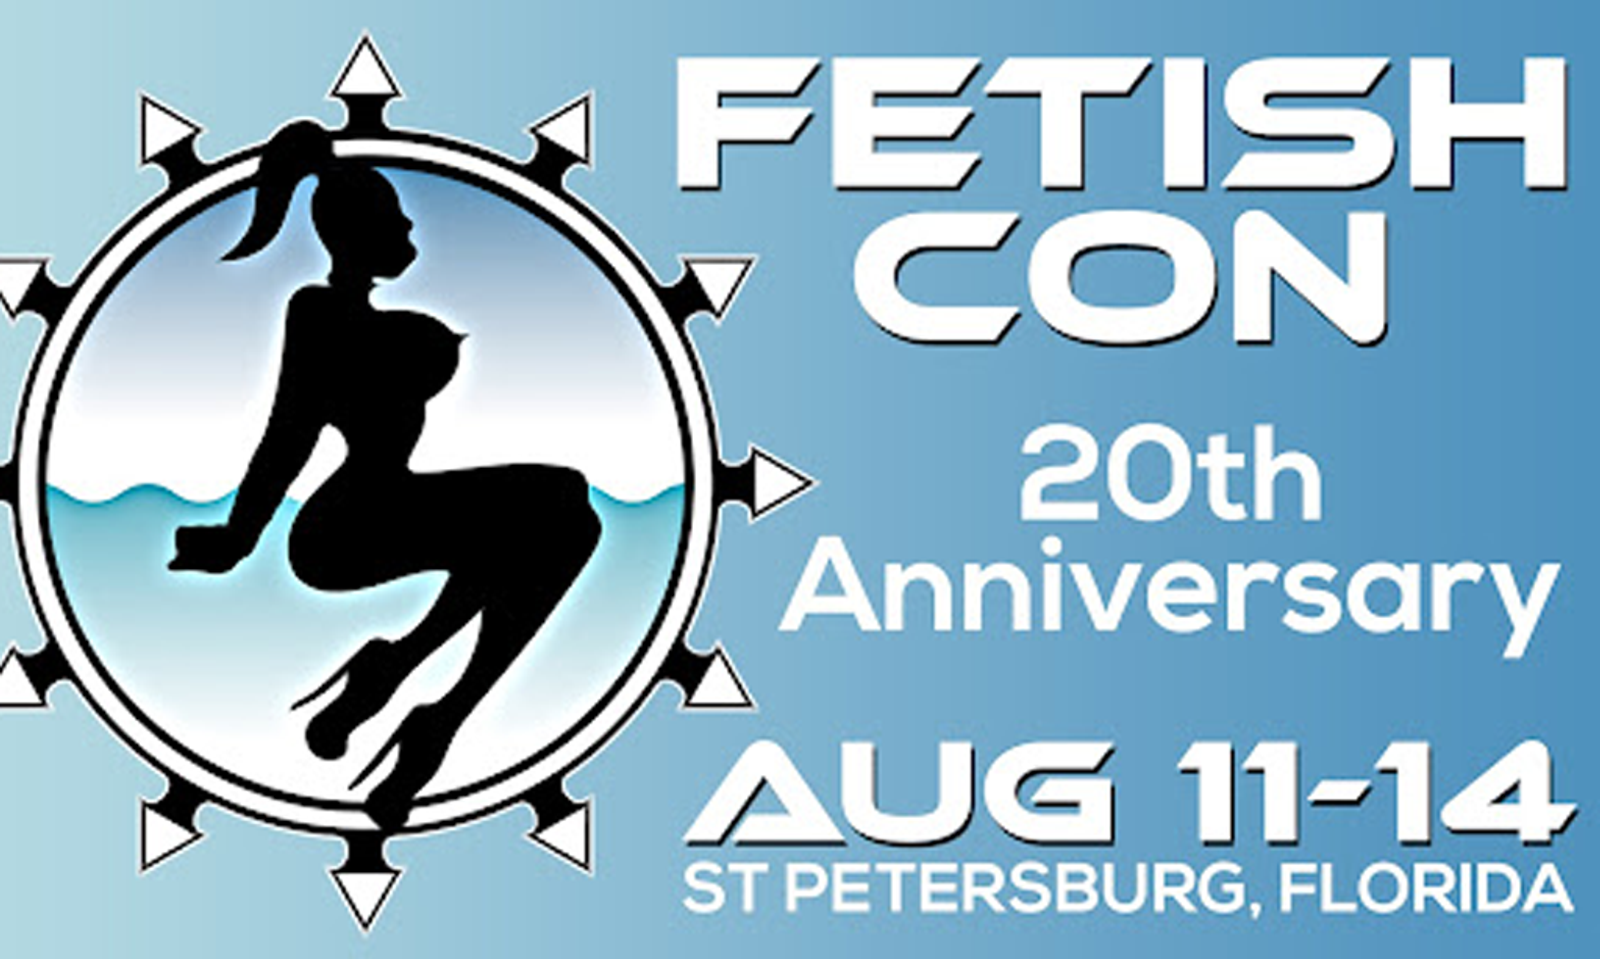 Fetish Con Set for 20th Anniversary Trade Show